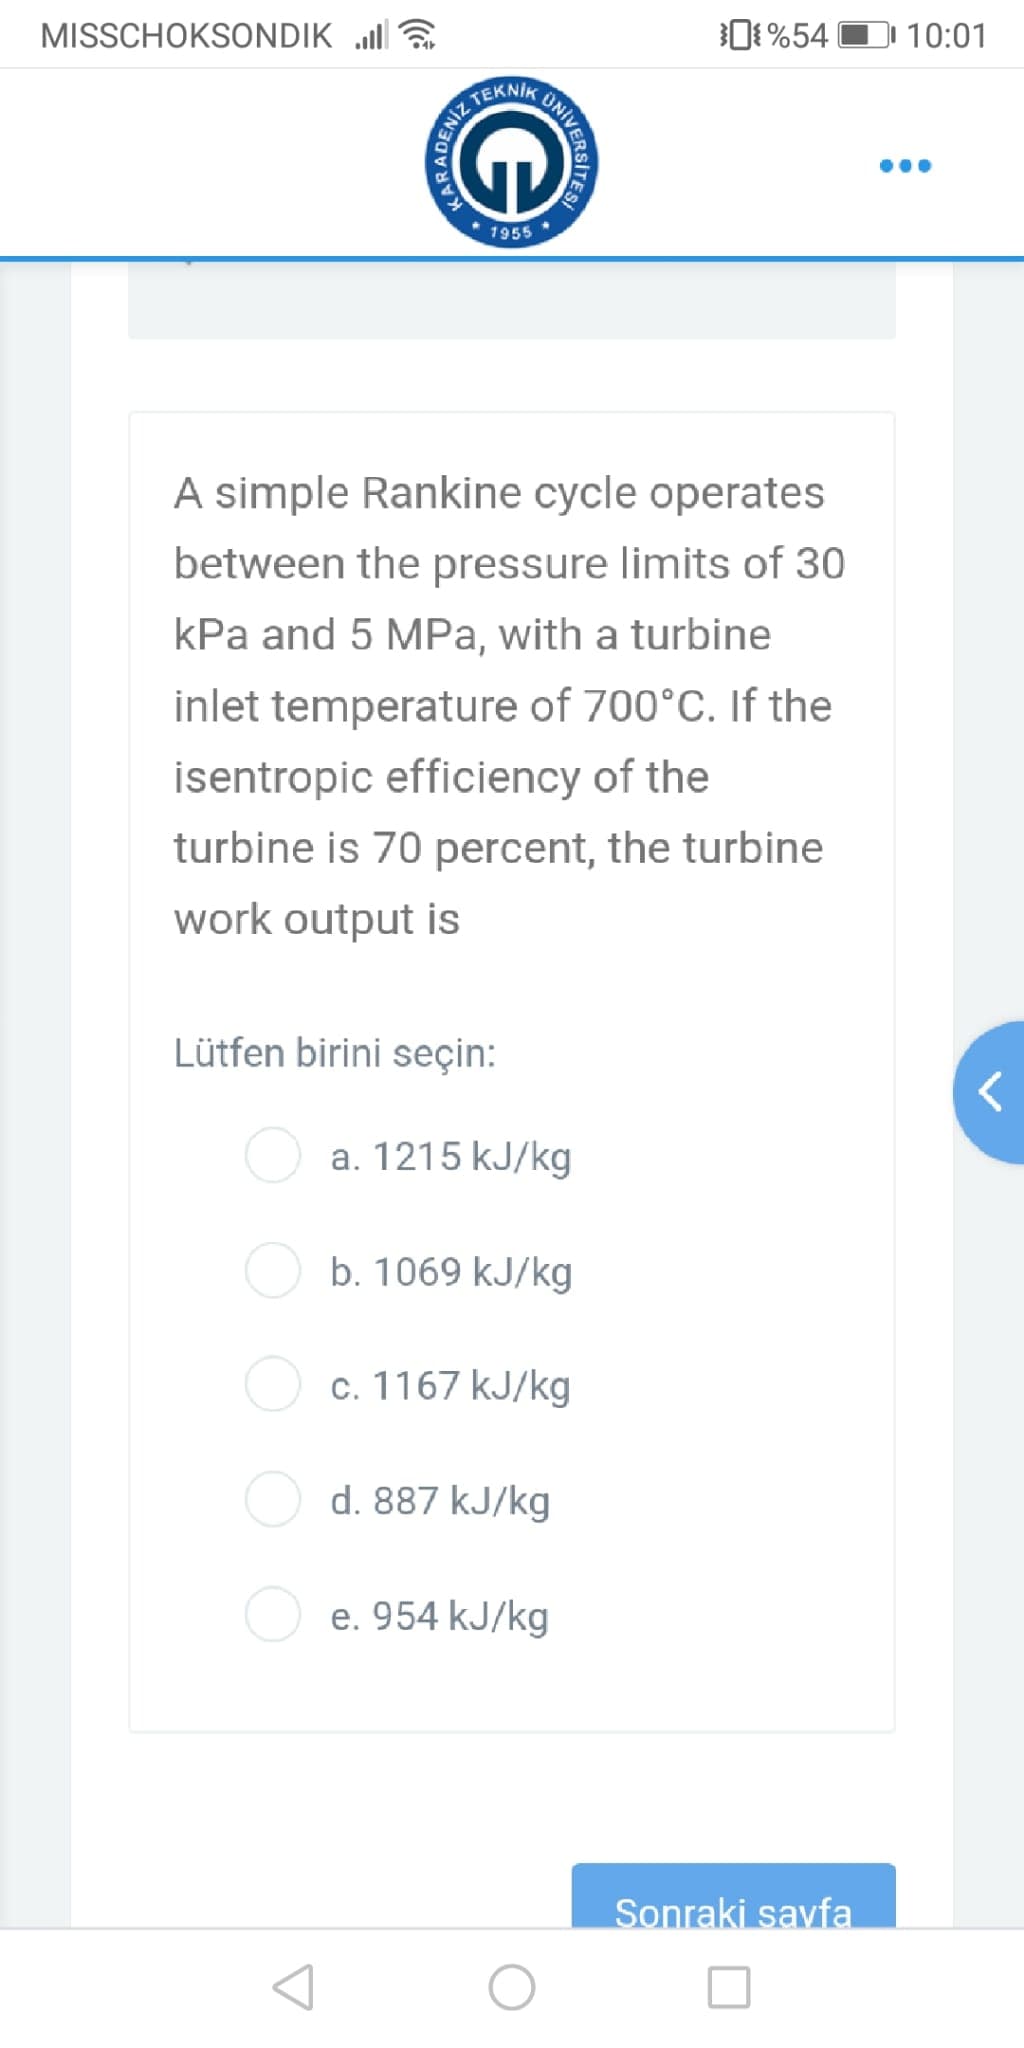 MISSCHOKSONDIK a
O %54 O 10:01
TEKNIK
1955
A simple Rankine cycle operates
between the pressure limits of 30
kPa and 5 MPa, with a turbine
inlet temperature of 700°C. If the
isentropic efficiency of the
turbine is 70 percent, the turbine
work output is
Lütfen birini seçin:
O a. 1215 kJ/kg
O b. 1069 kJ/kg
O c. 1167 kJ/kg
d. 887 kJ/kg
e. 954 kJ/kg
Sonraki savfa
KAR
RADE
ENİZ
KUNIVER
ERSITES!
